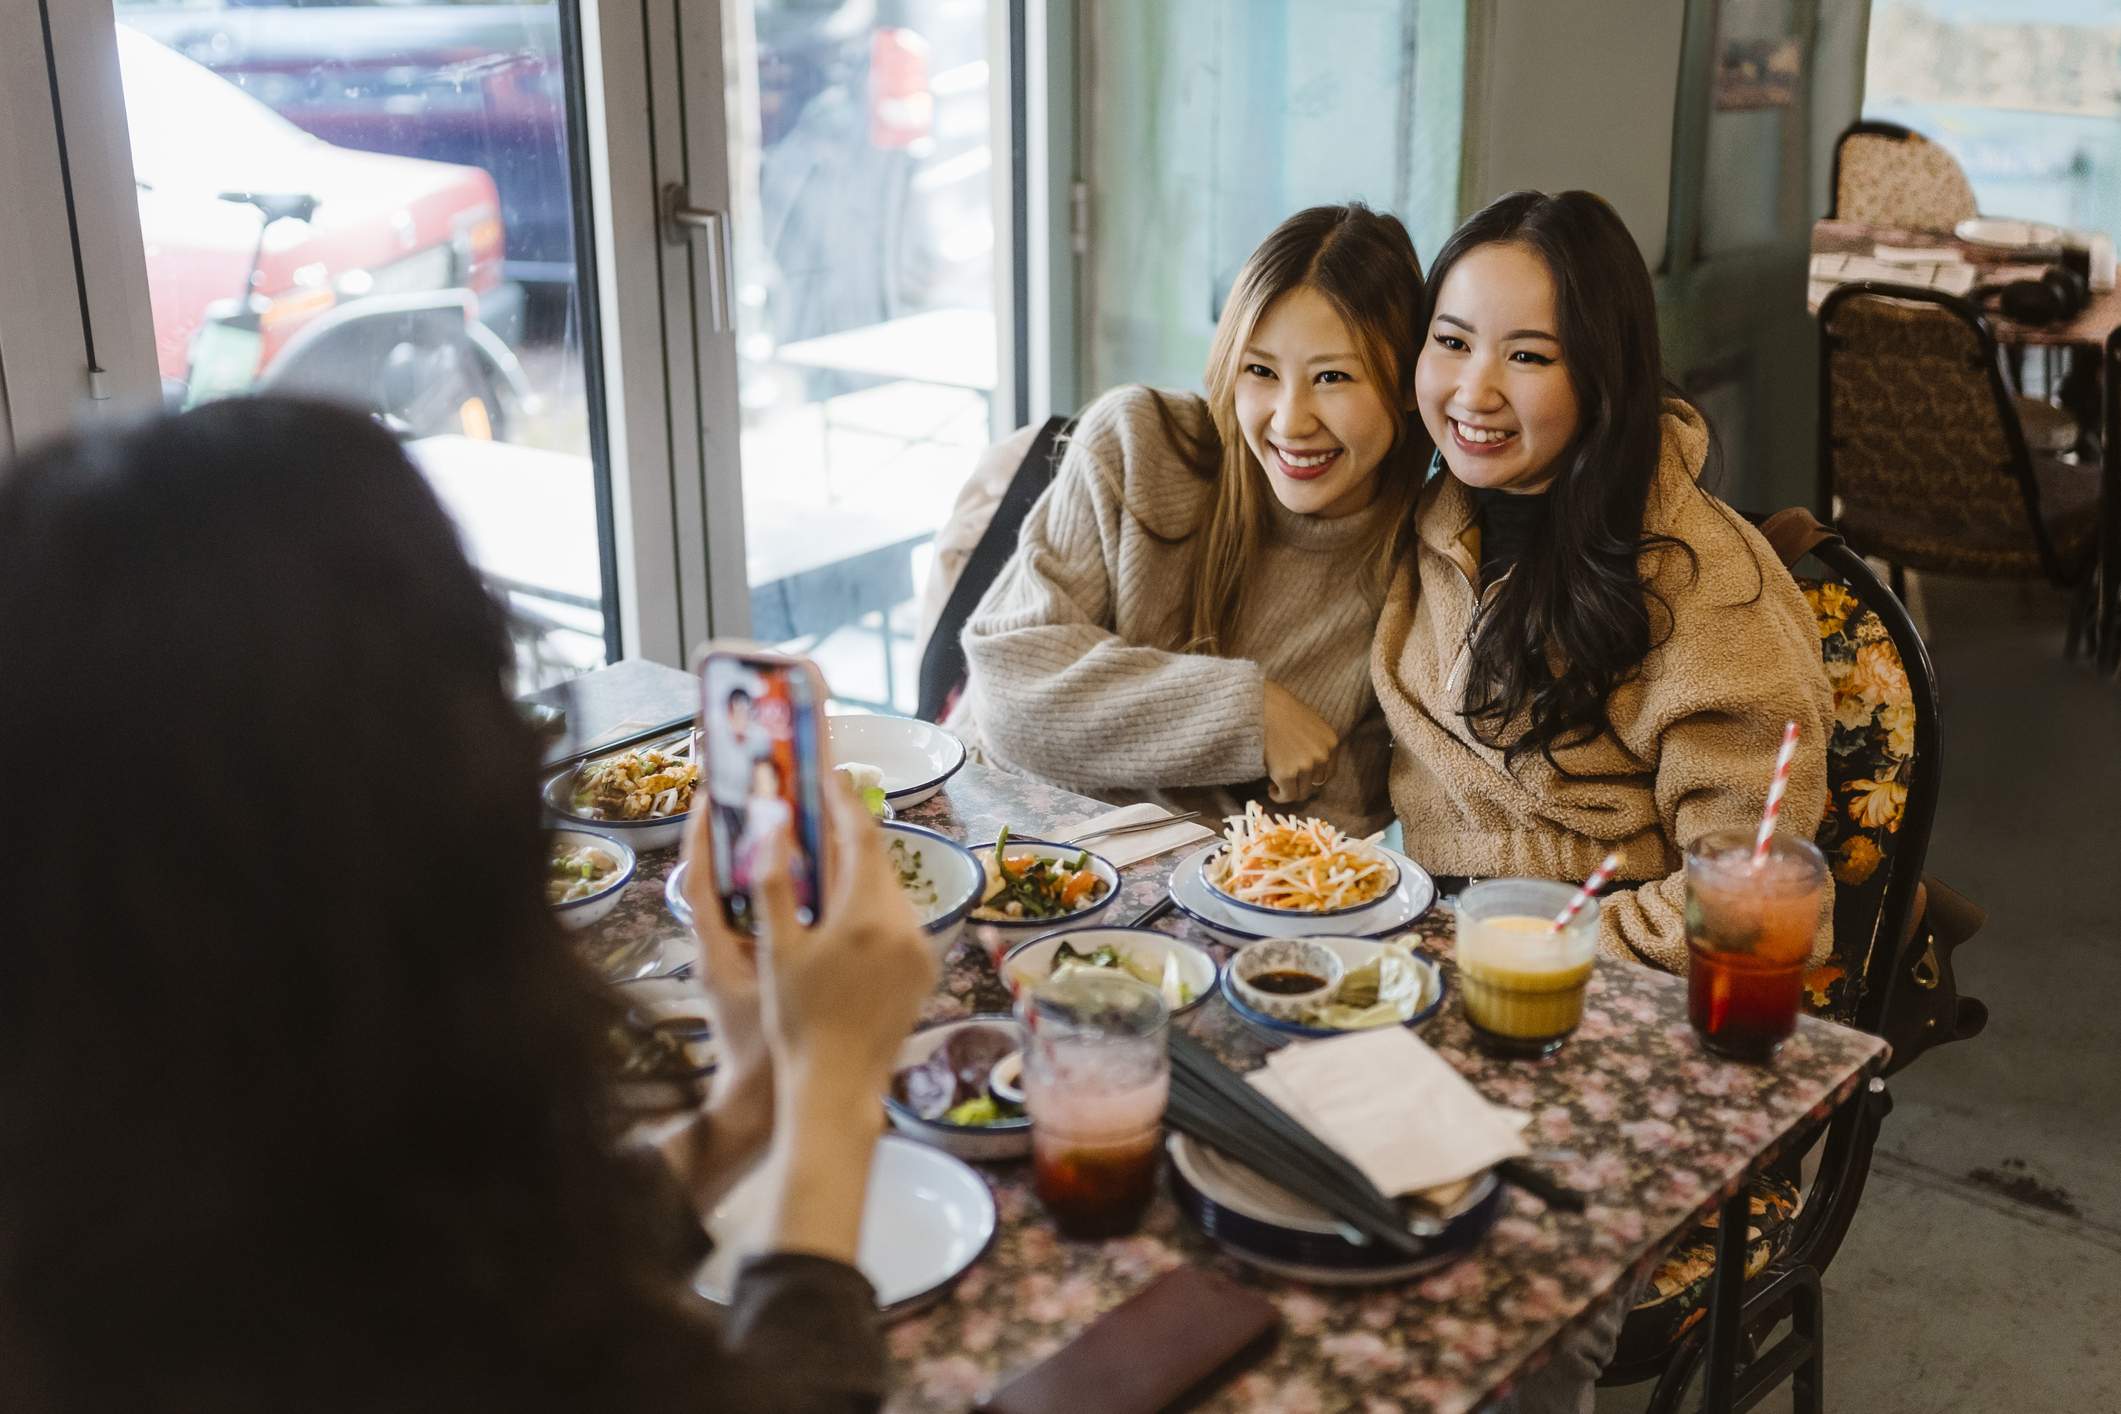 Social media influencers taking selfies at a restaurant